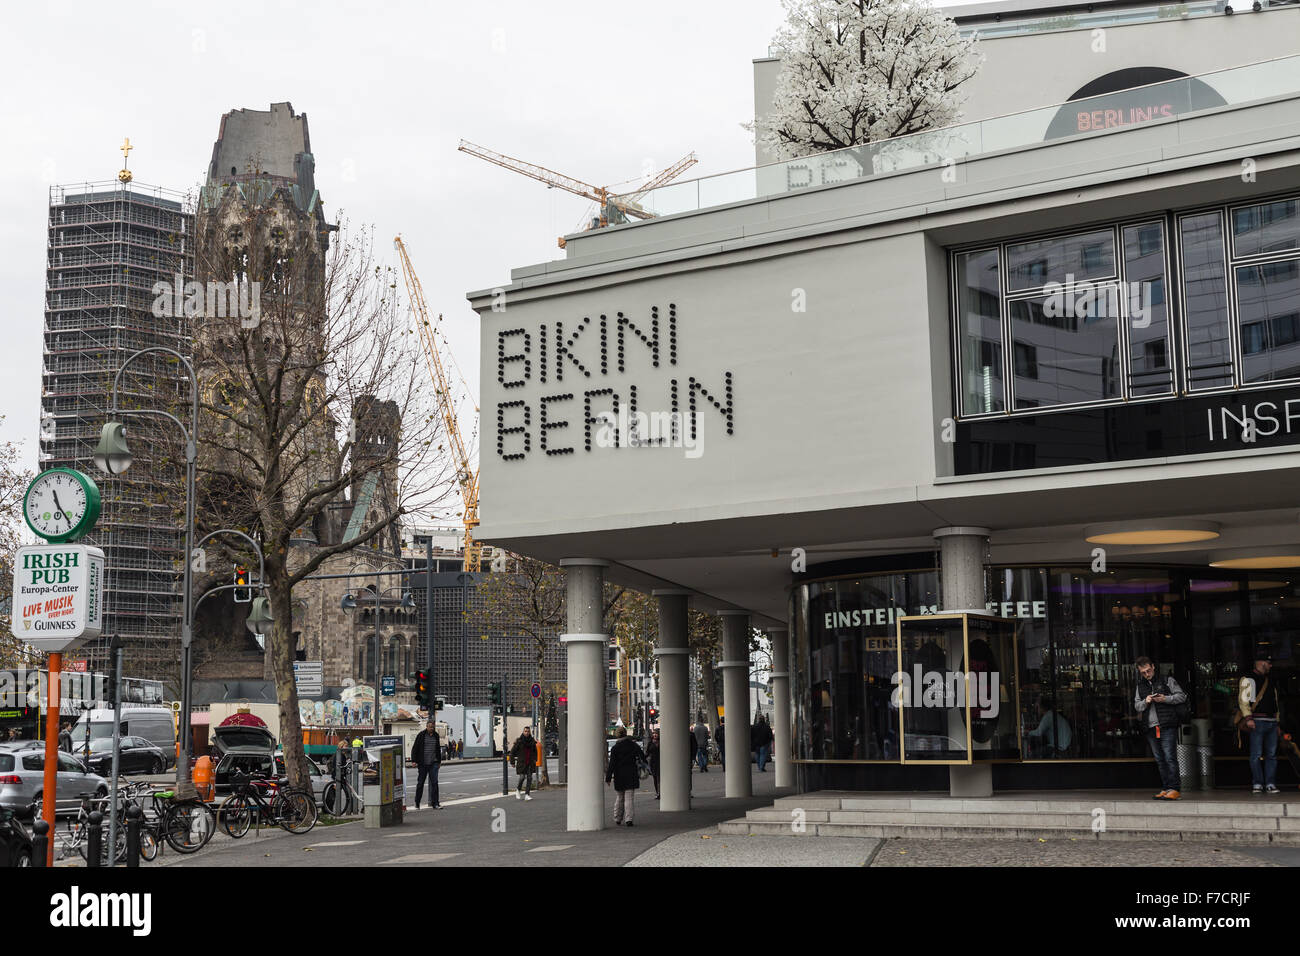 Bikini Berlin Shopping Mall, Berlin, Germany Stock Photo